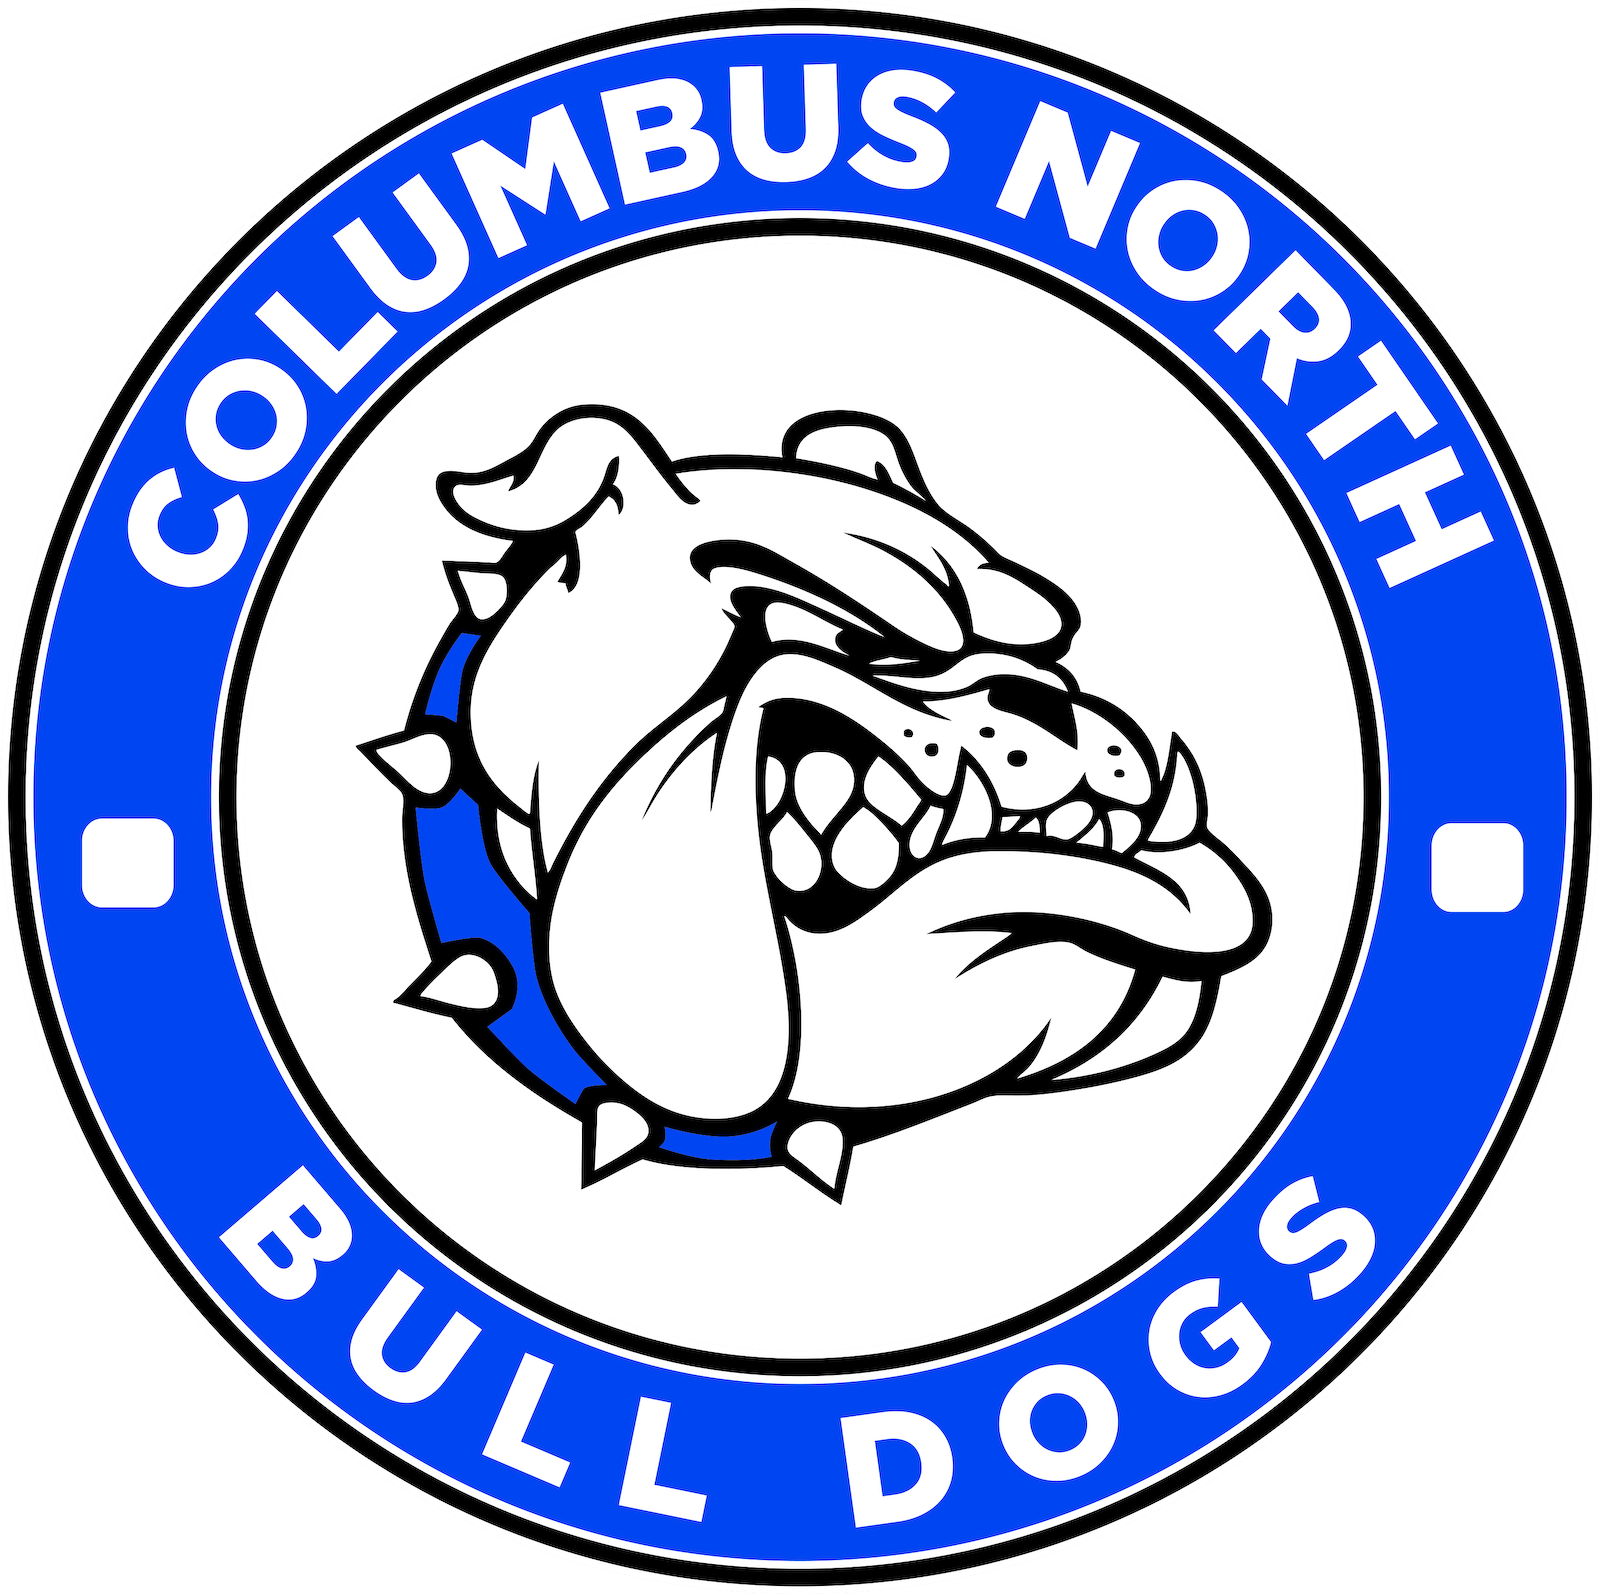 Eight Bull Dog seniors sign to participate in collegiate athletic programs cover photo